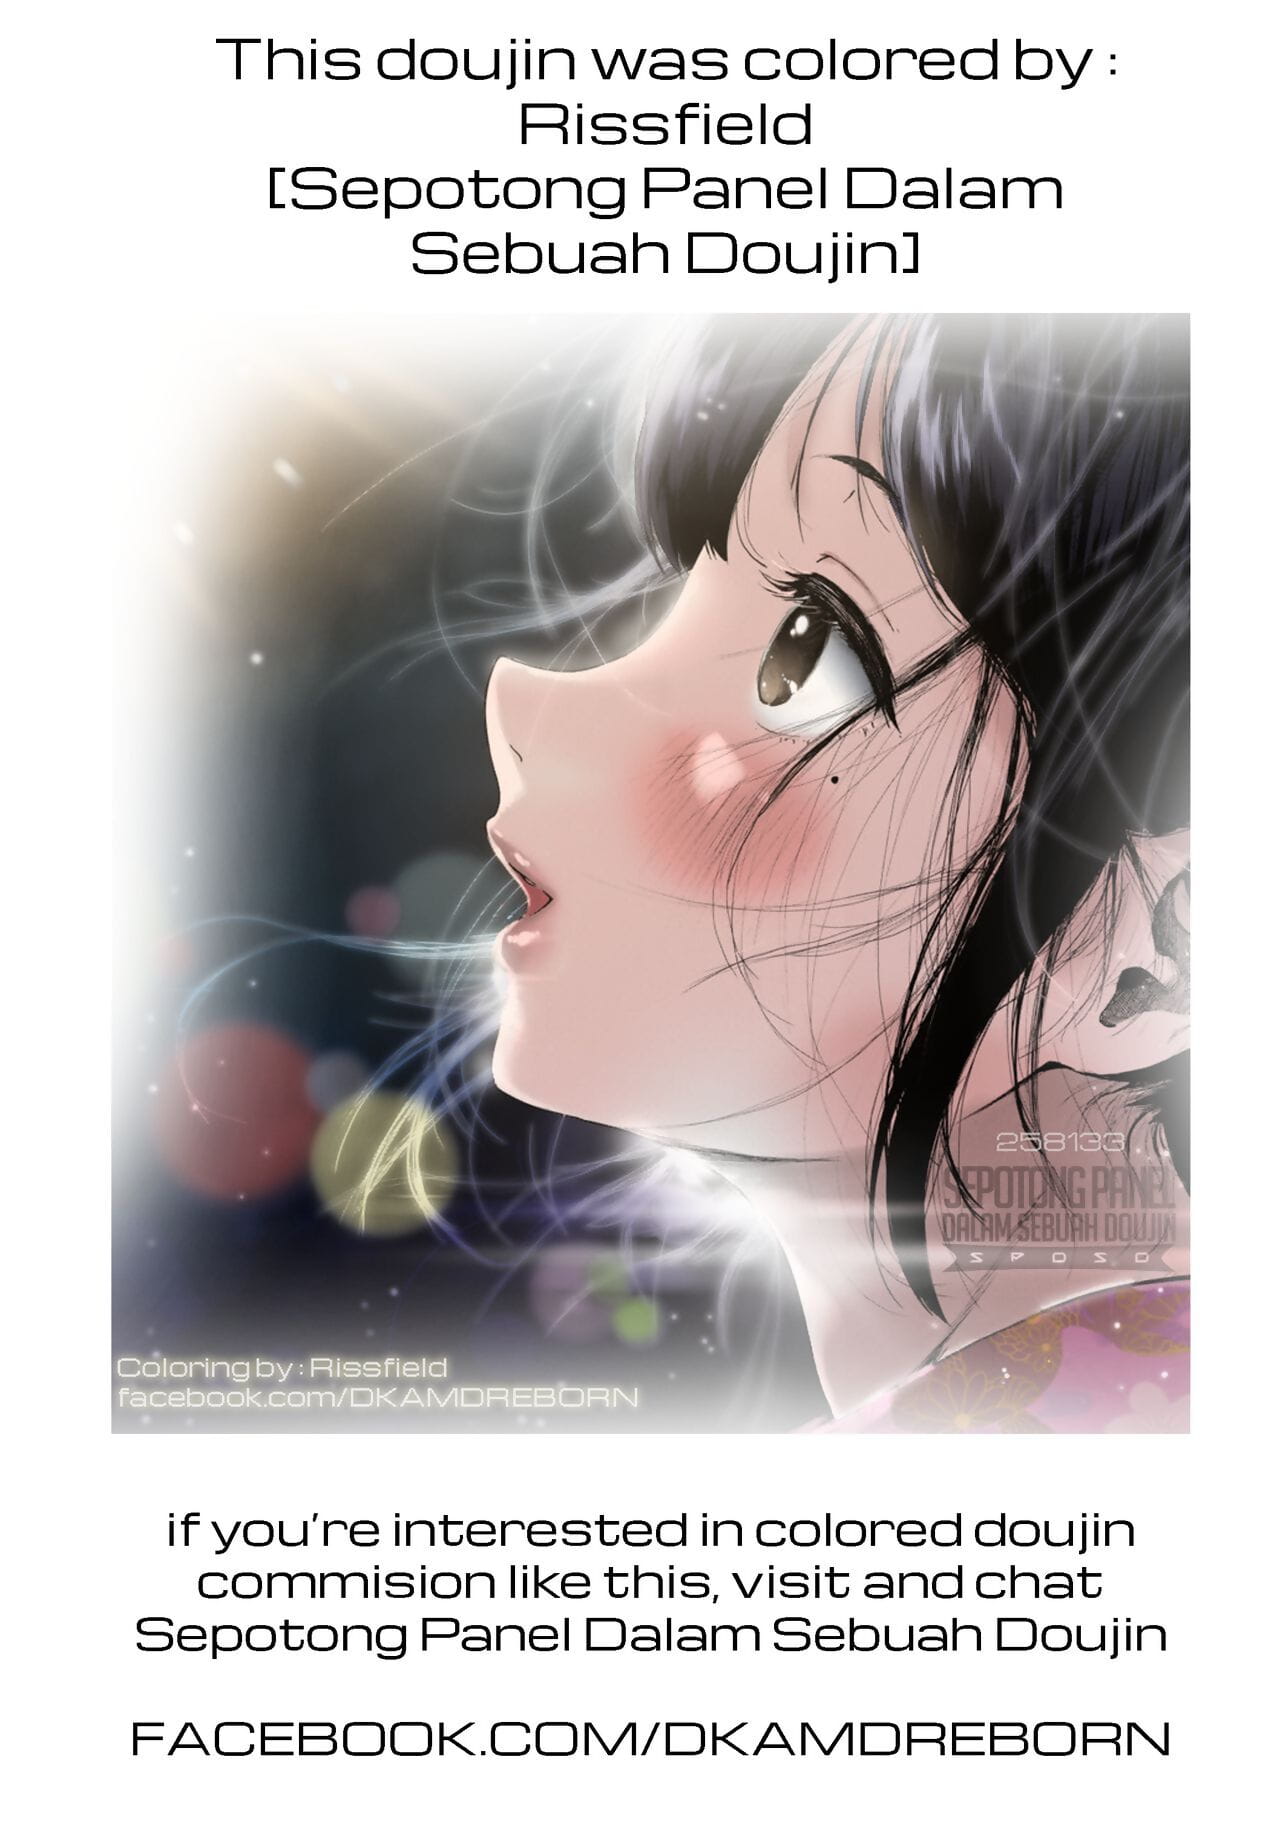 c96 Oppai Baibai azukiko hattoubun no persona persona 5 inglés biribiri coloreada spdsd Parte 2